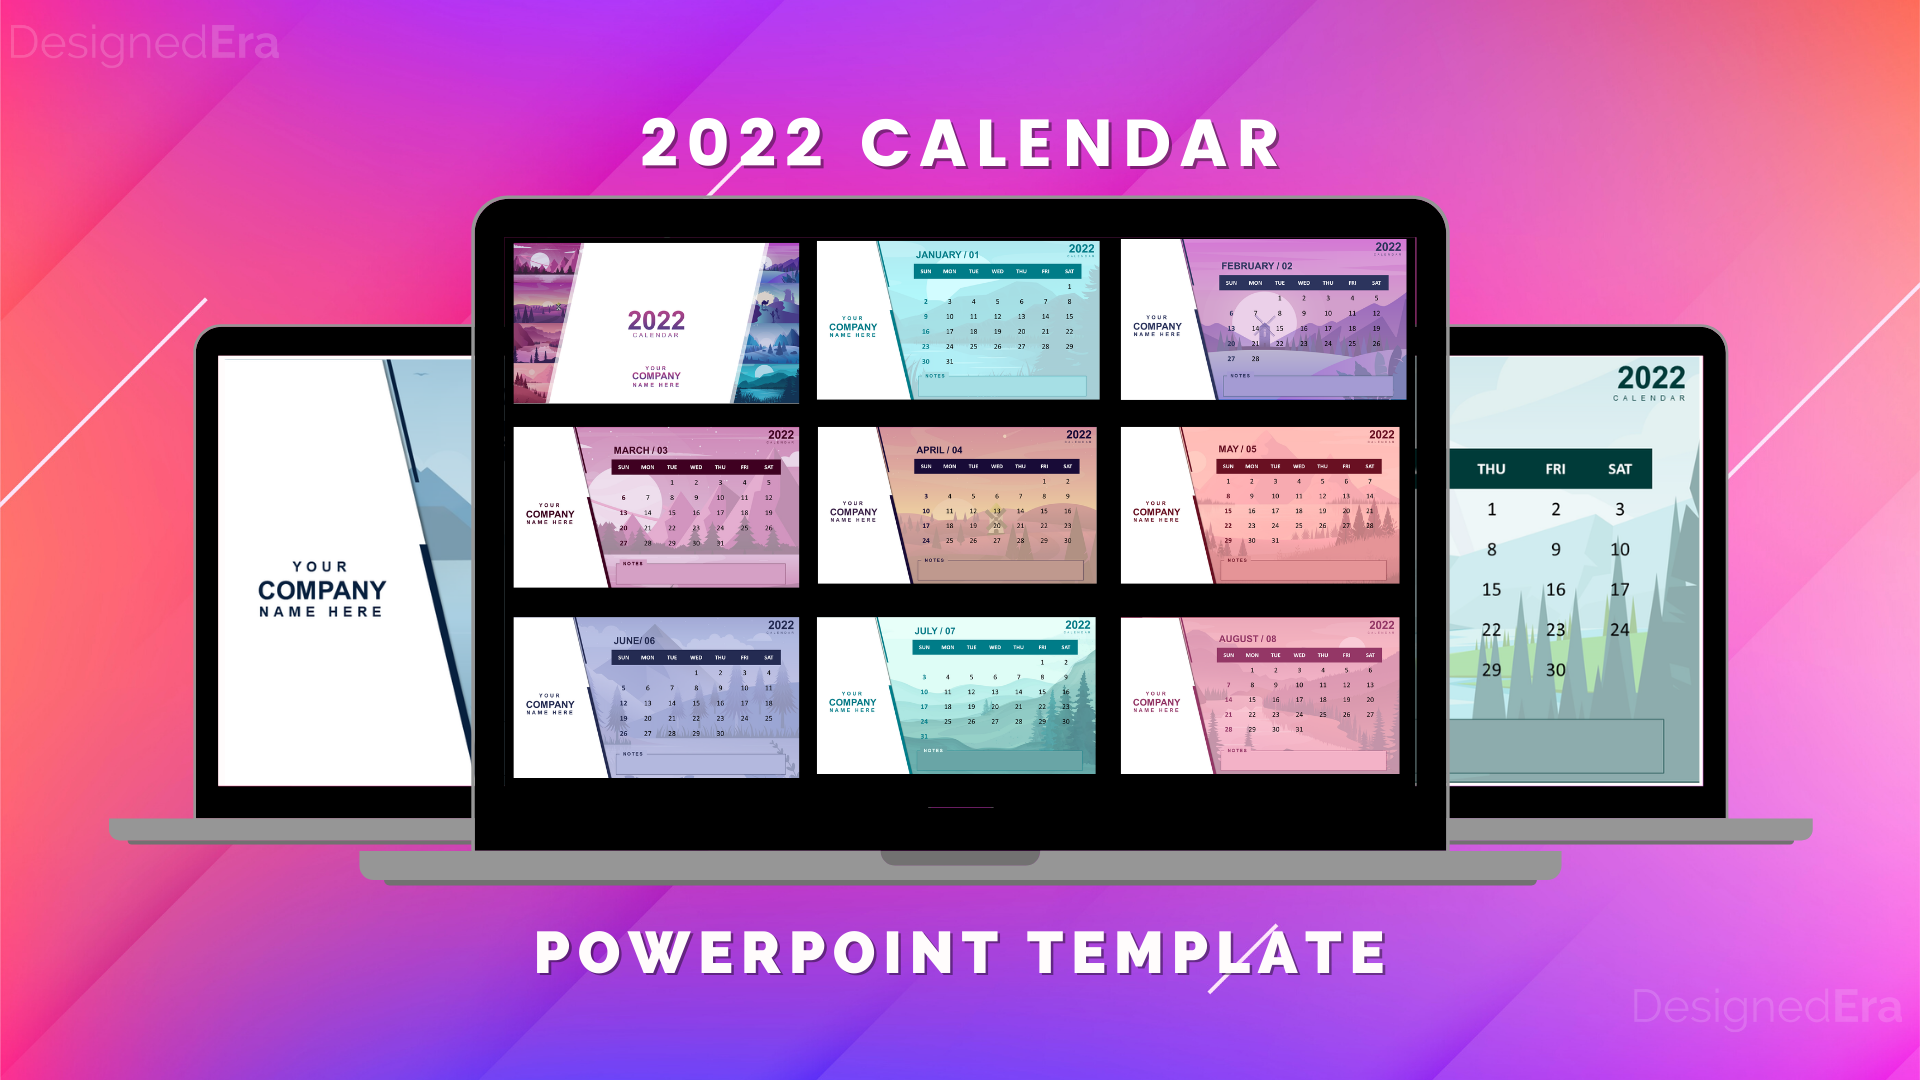 2022 Calendar PowerPoint Template DesignedEra